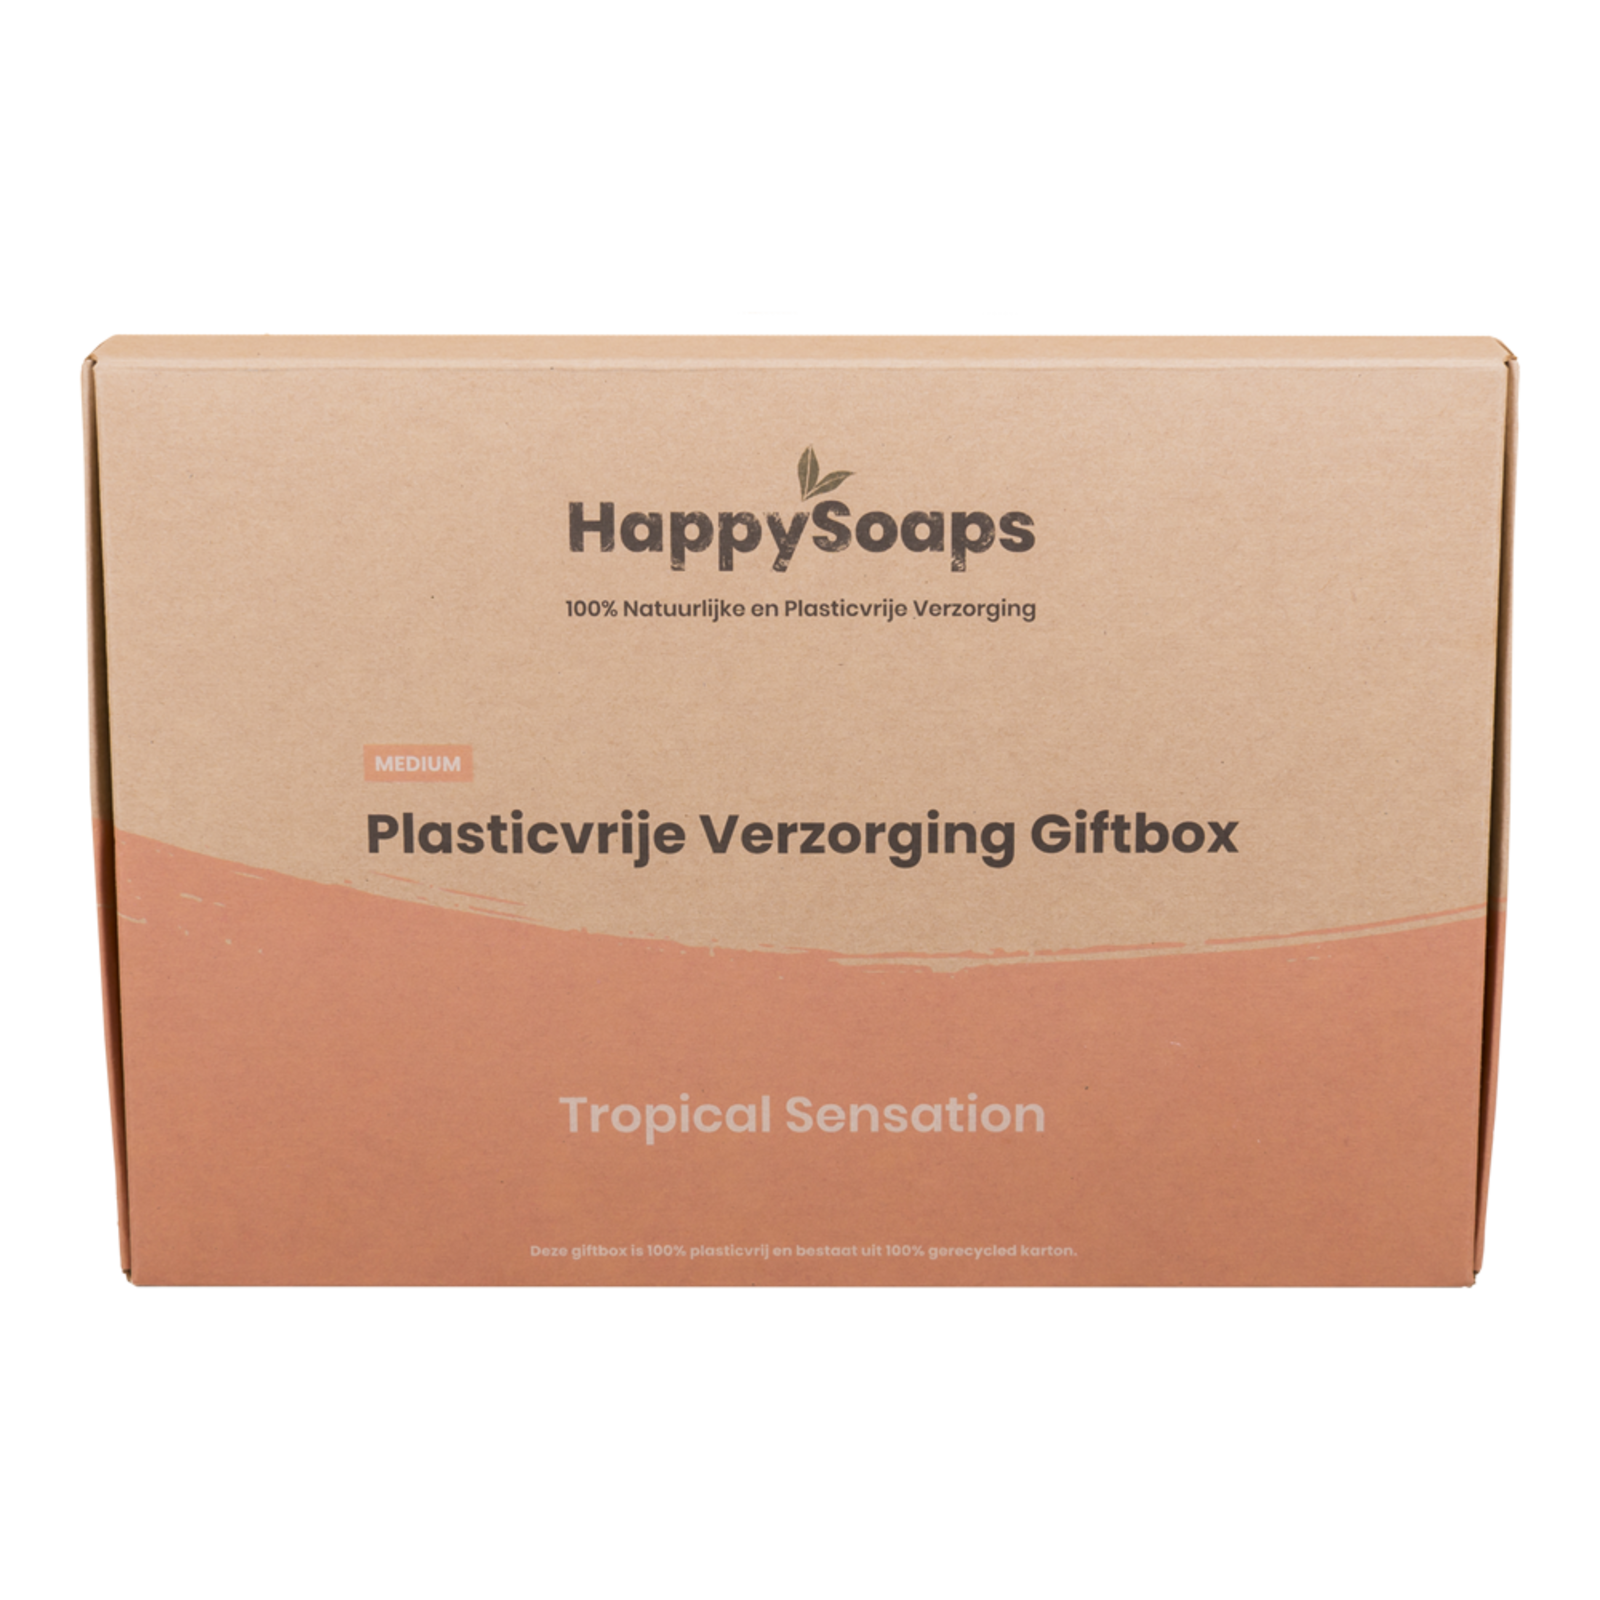 Happy soaps Plasticvrije Verzorging Giftbox - Tropical Sensation Medium